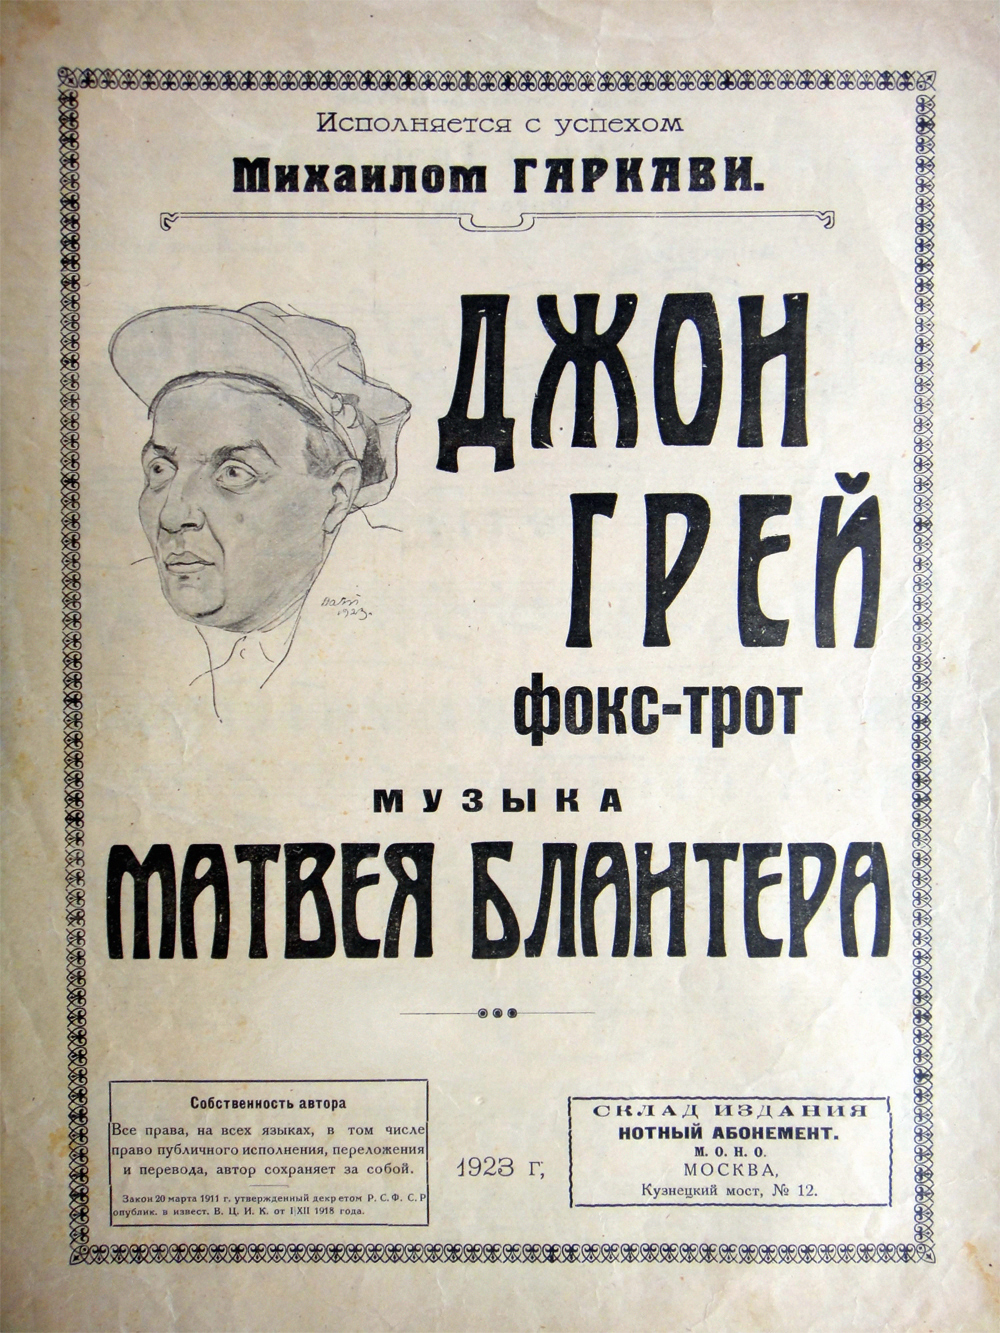 Обложка нот фокстрота Матвея Блантера «Джон Грей». Москва, 1923 г.